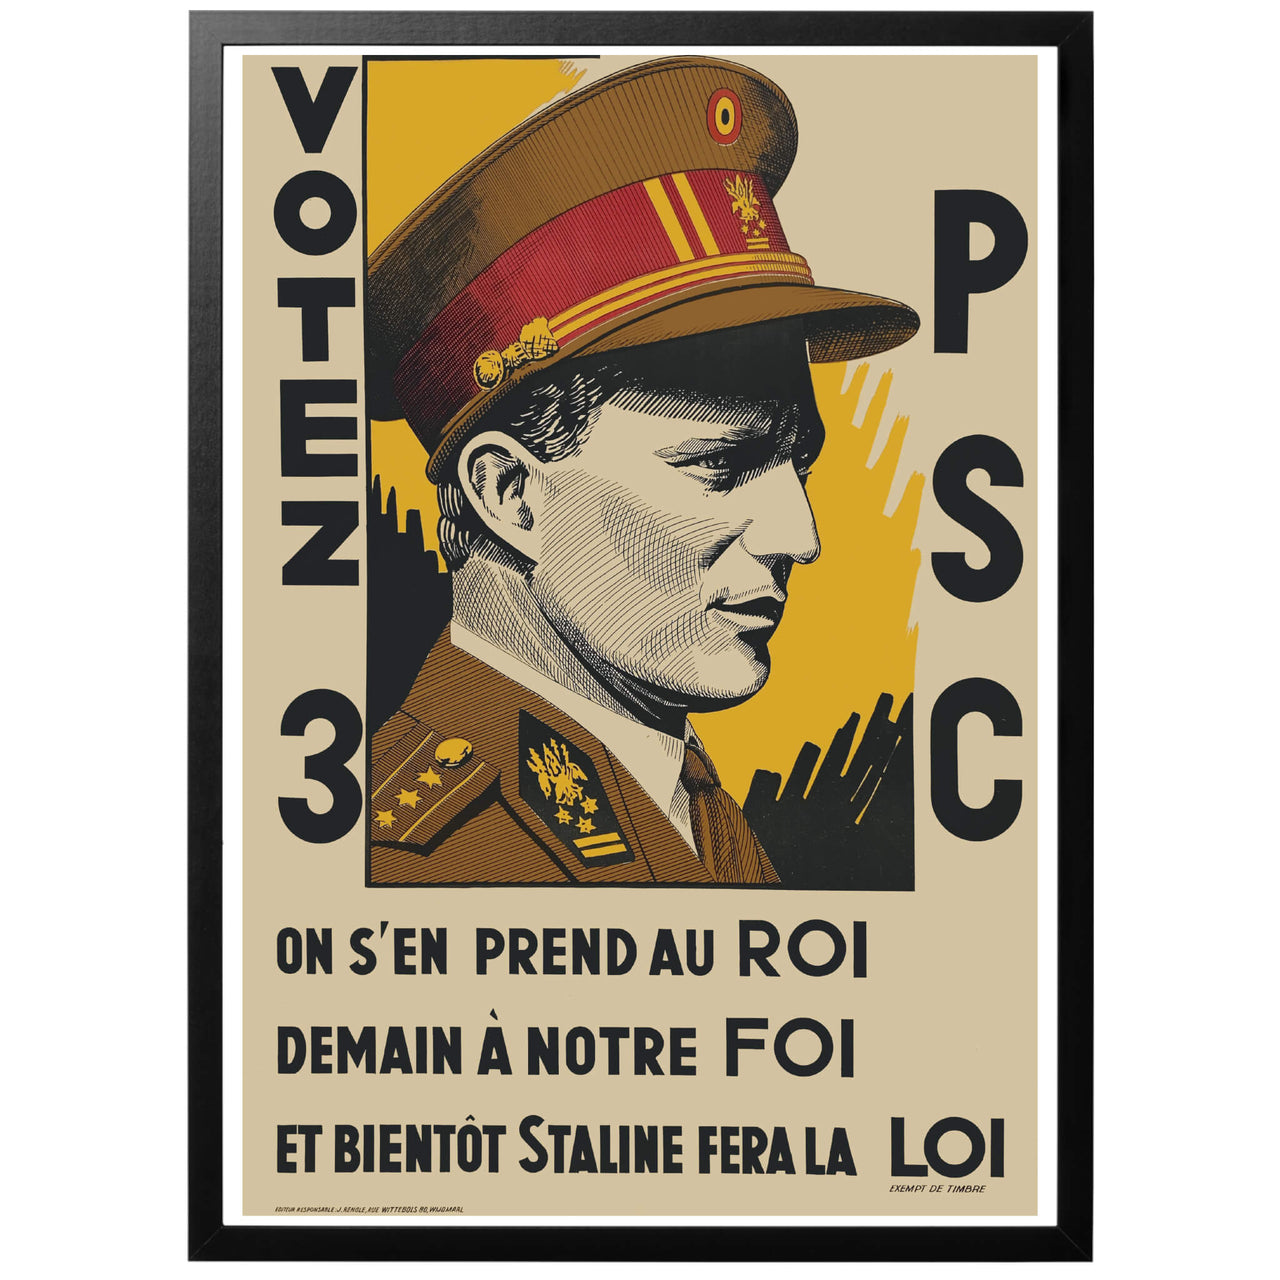 Votez 3 PSC Poster